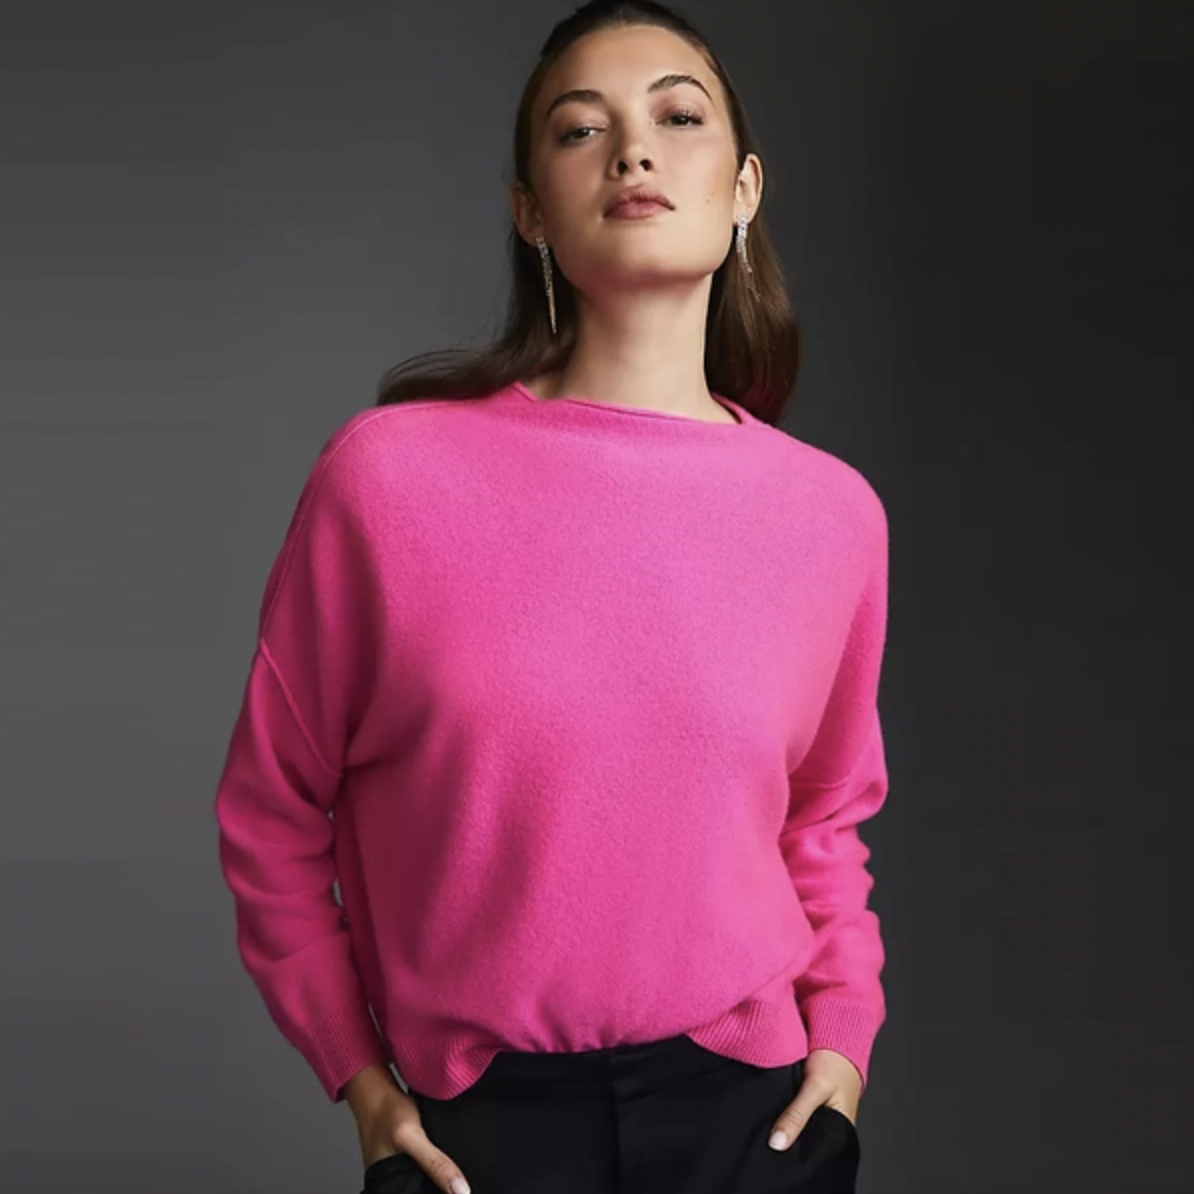 pilcro 100% cashmere alani hot pink oversized sweater - size medium